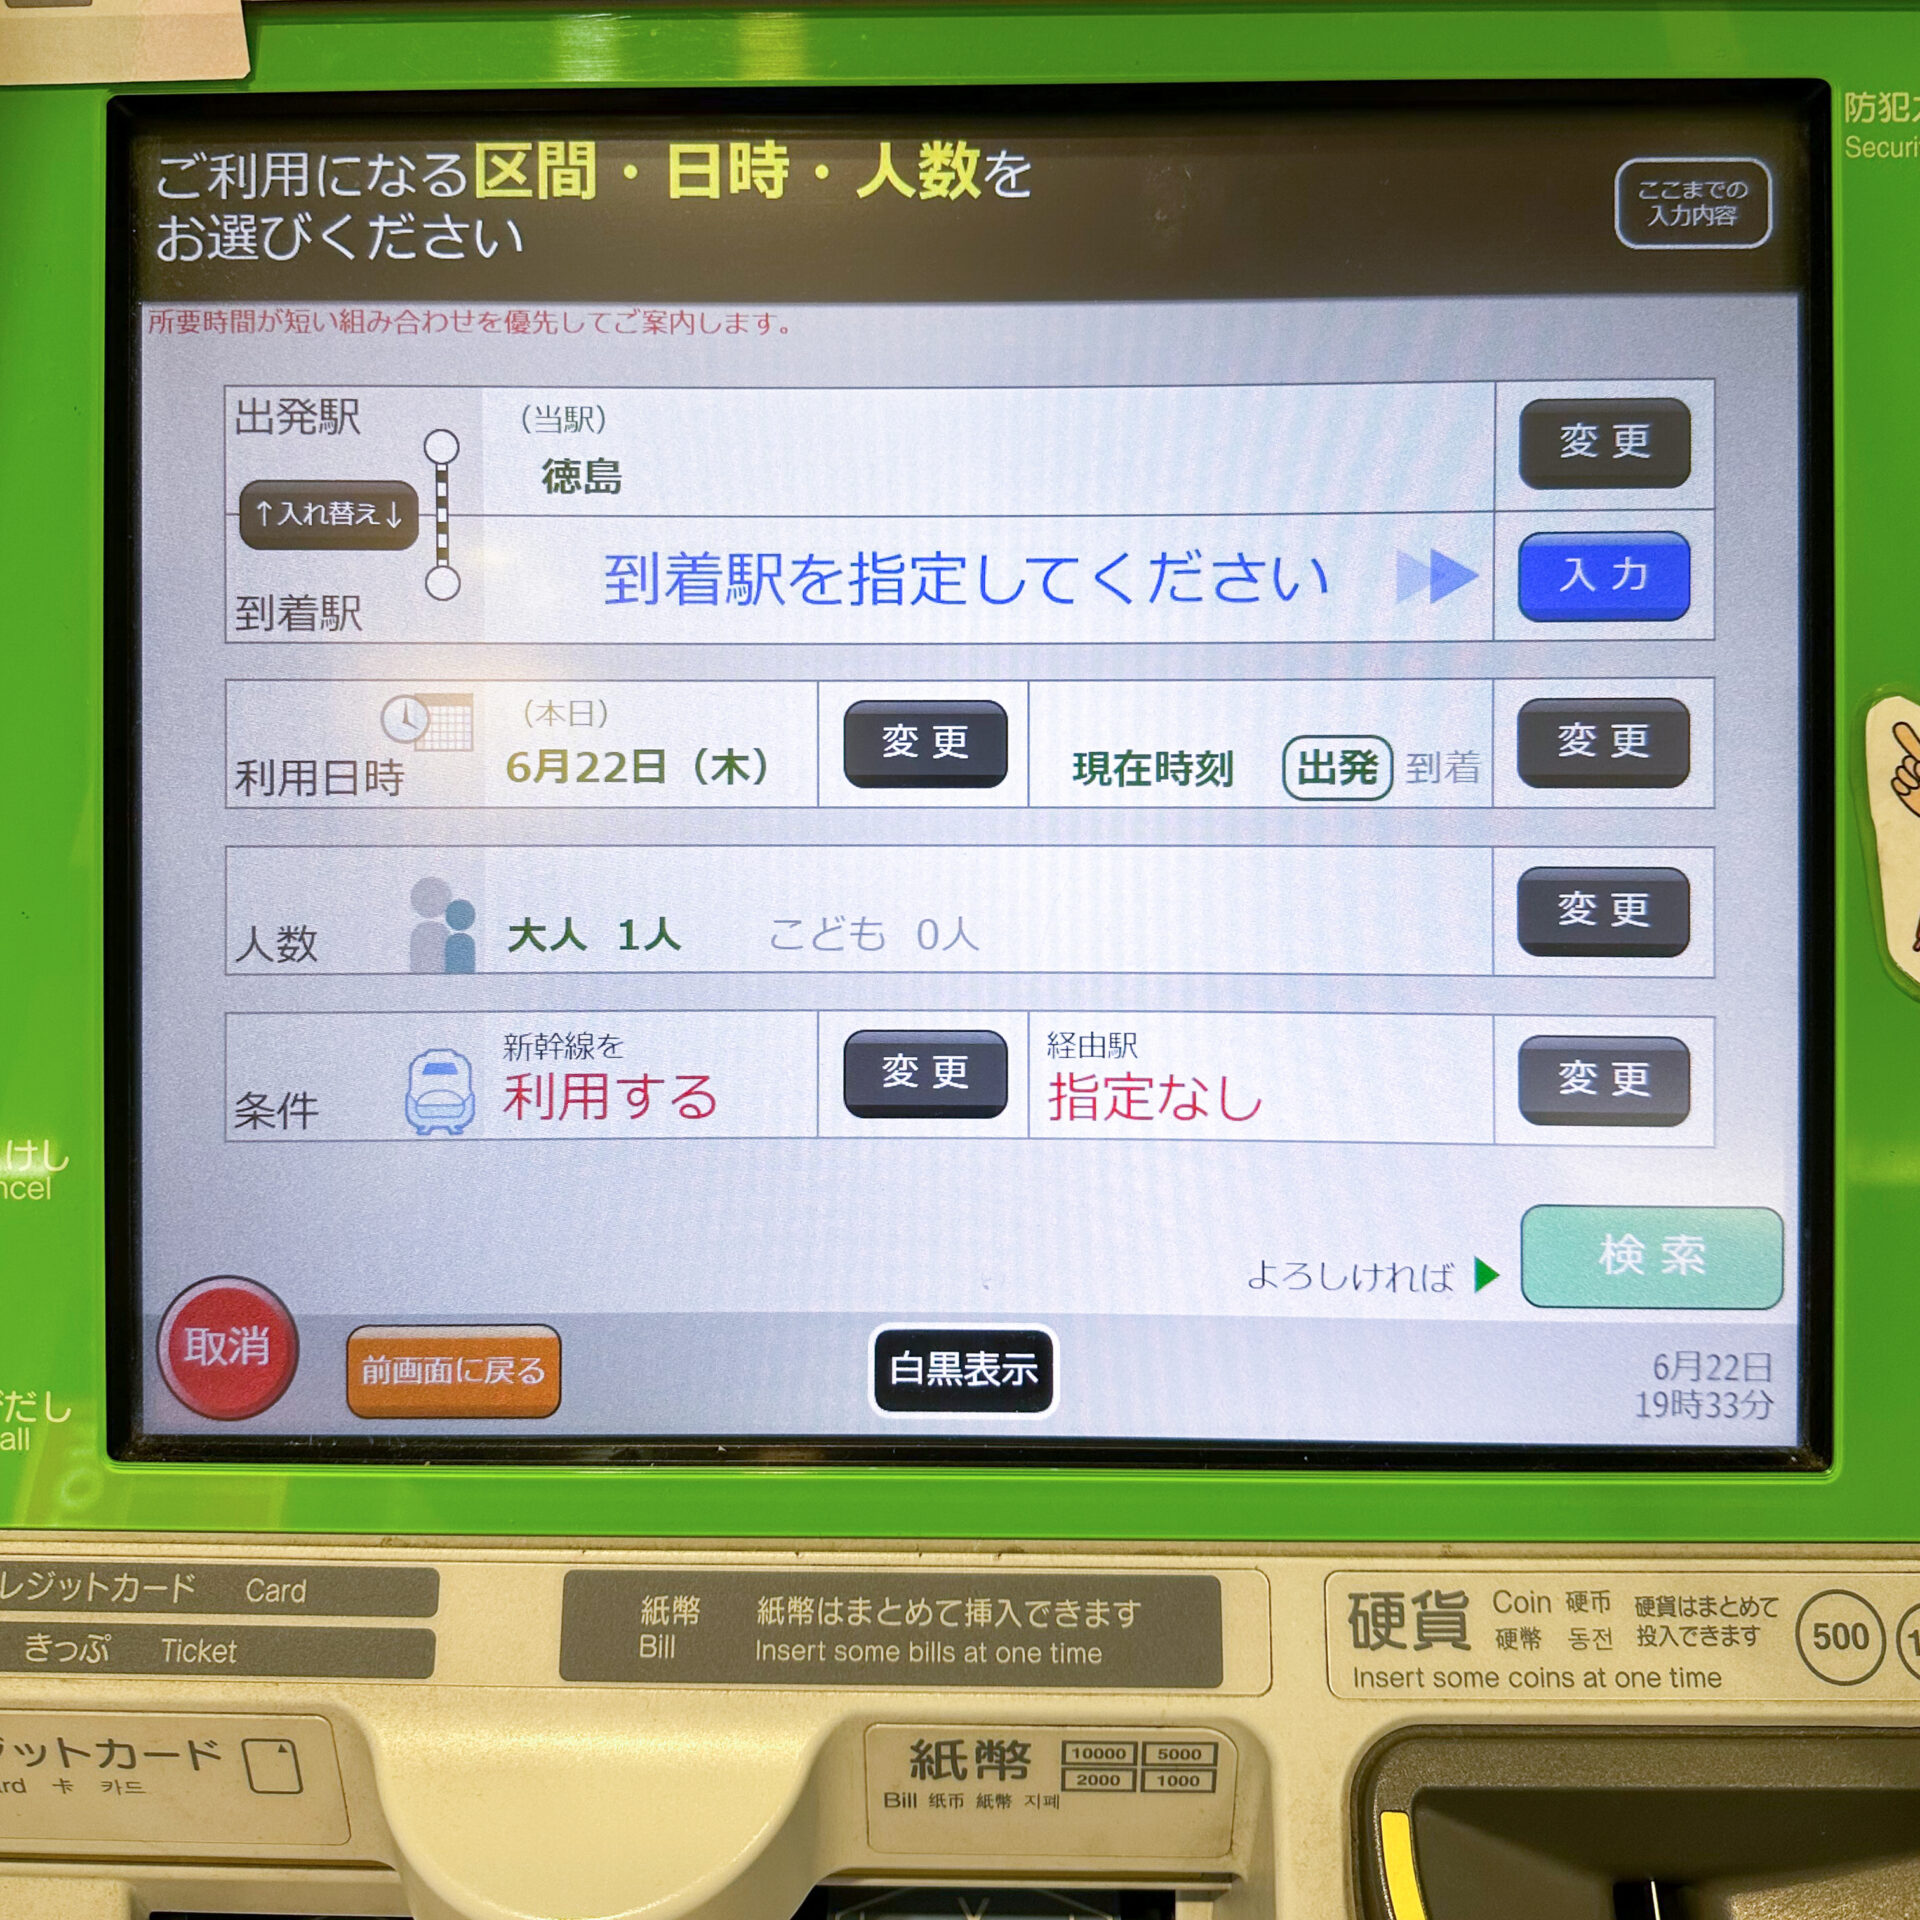 JR四国みどりの券売機操作画面